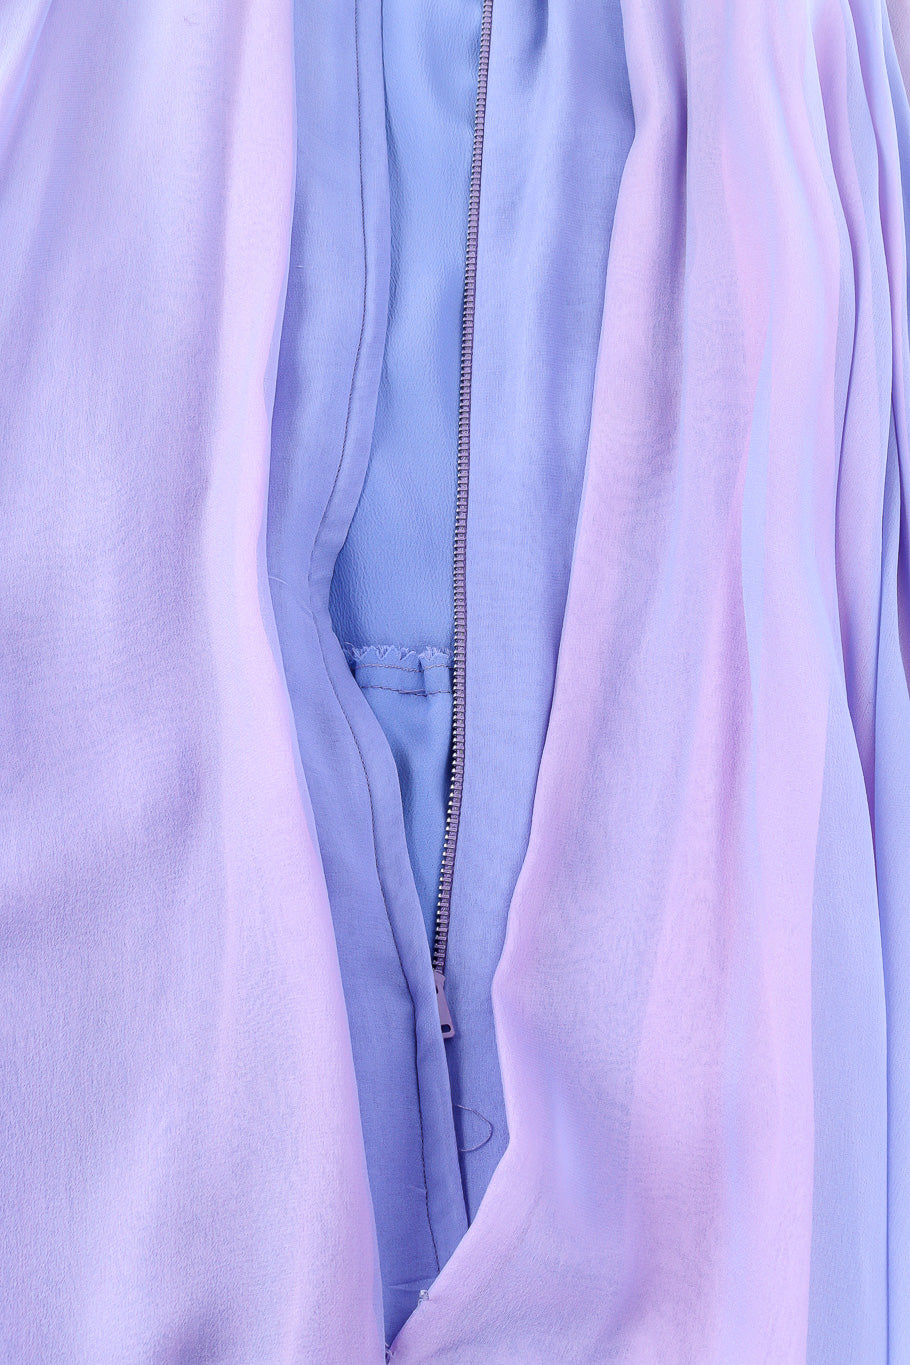 Vintage Modern Couture Beaded Collar Dress back zipper closeup closeup @Recessla